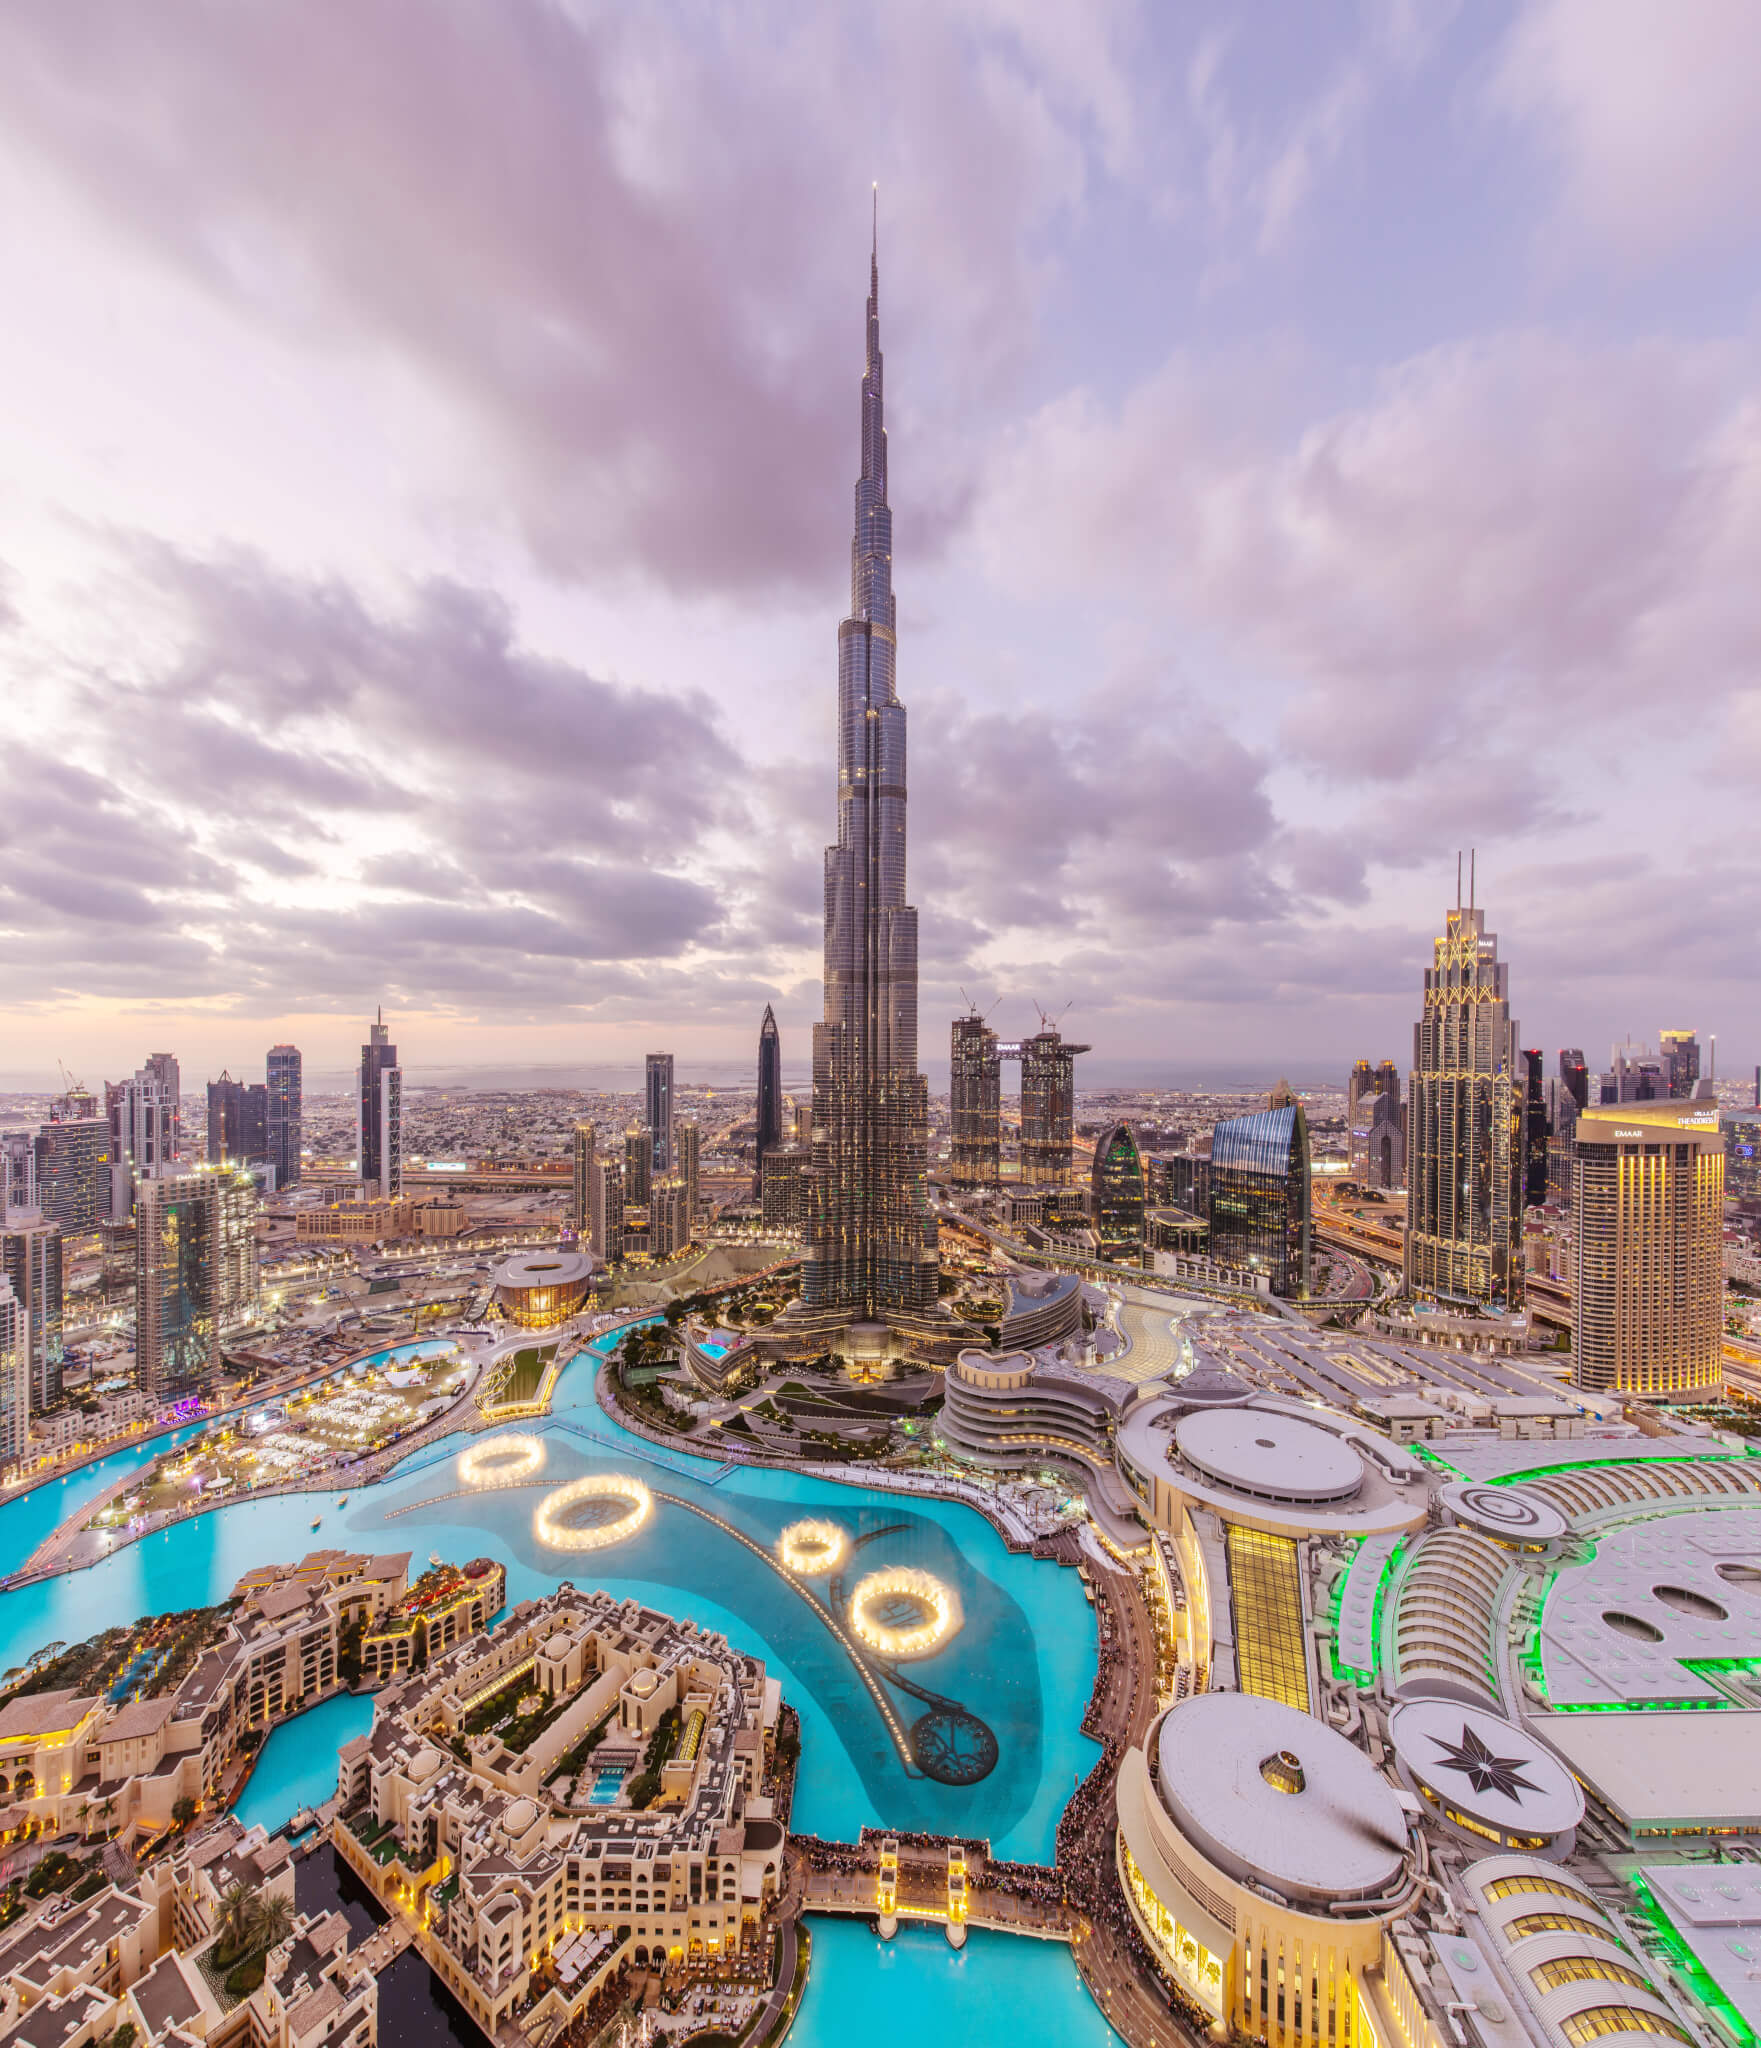 World's biggest pool in Dubai